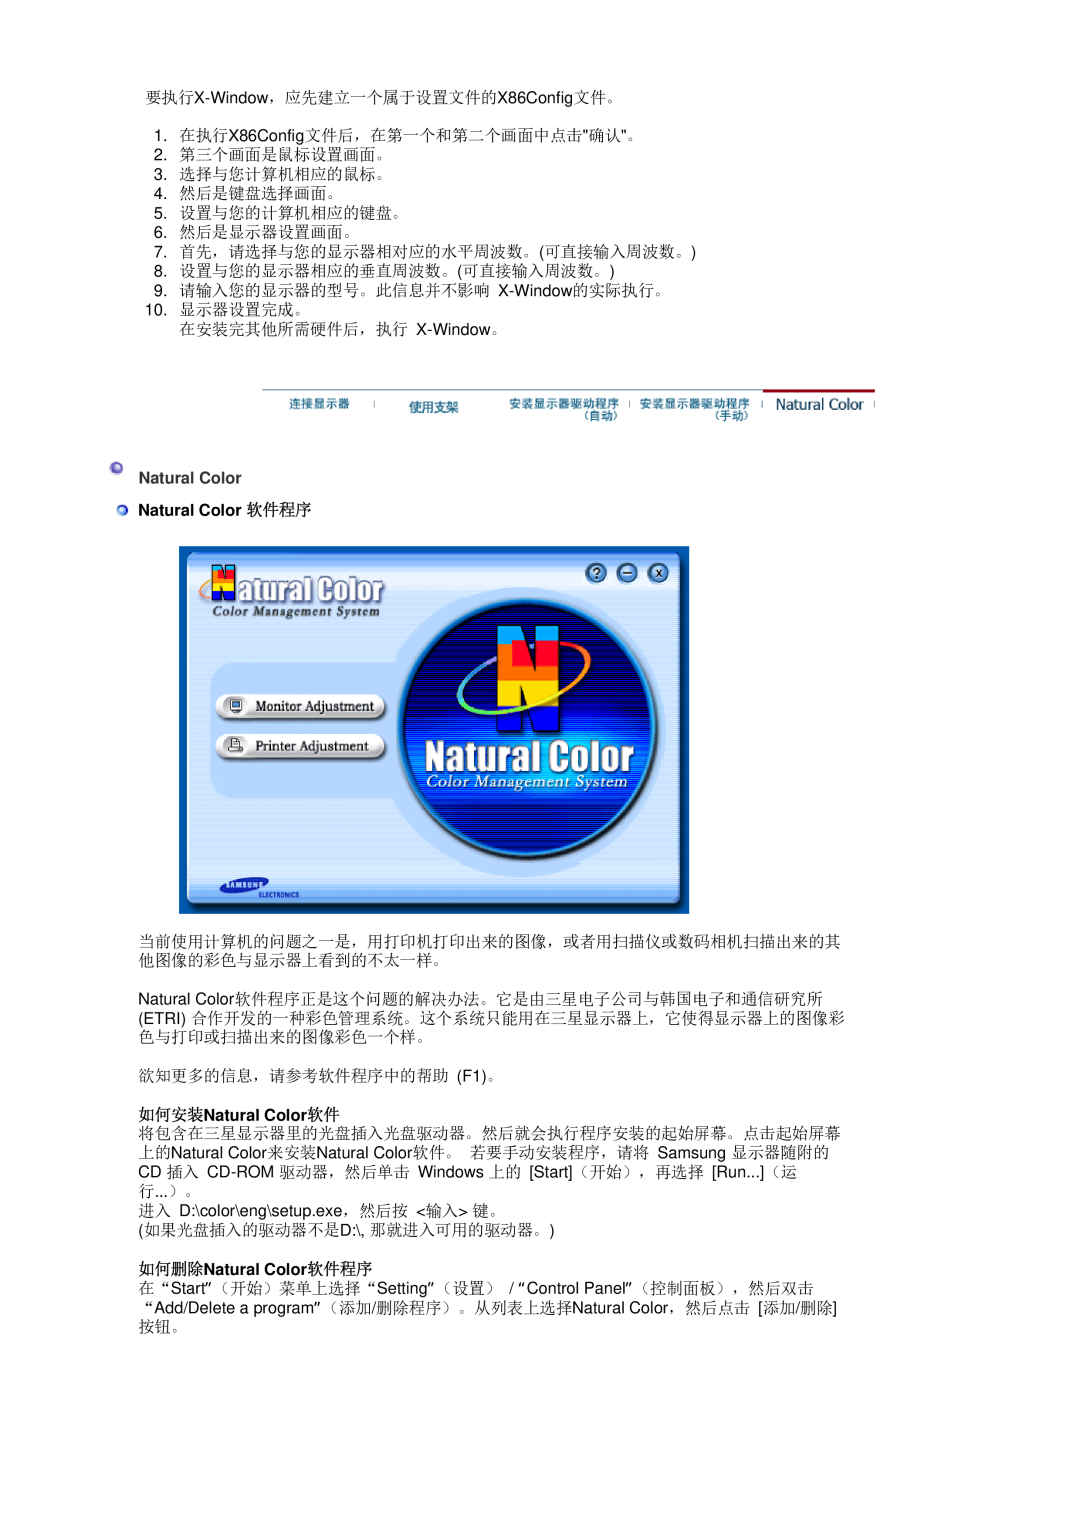 Samsung LS19HADKSE/EDC, LS19HADKSP/EDC, LS17HADKSX/EDC manual Natural Color 软件程序, 如何安装Natural Color软件, 如何删除Natural Color软件程序 